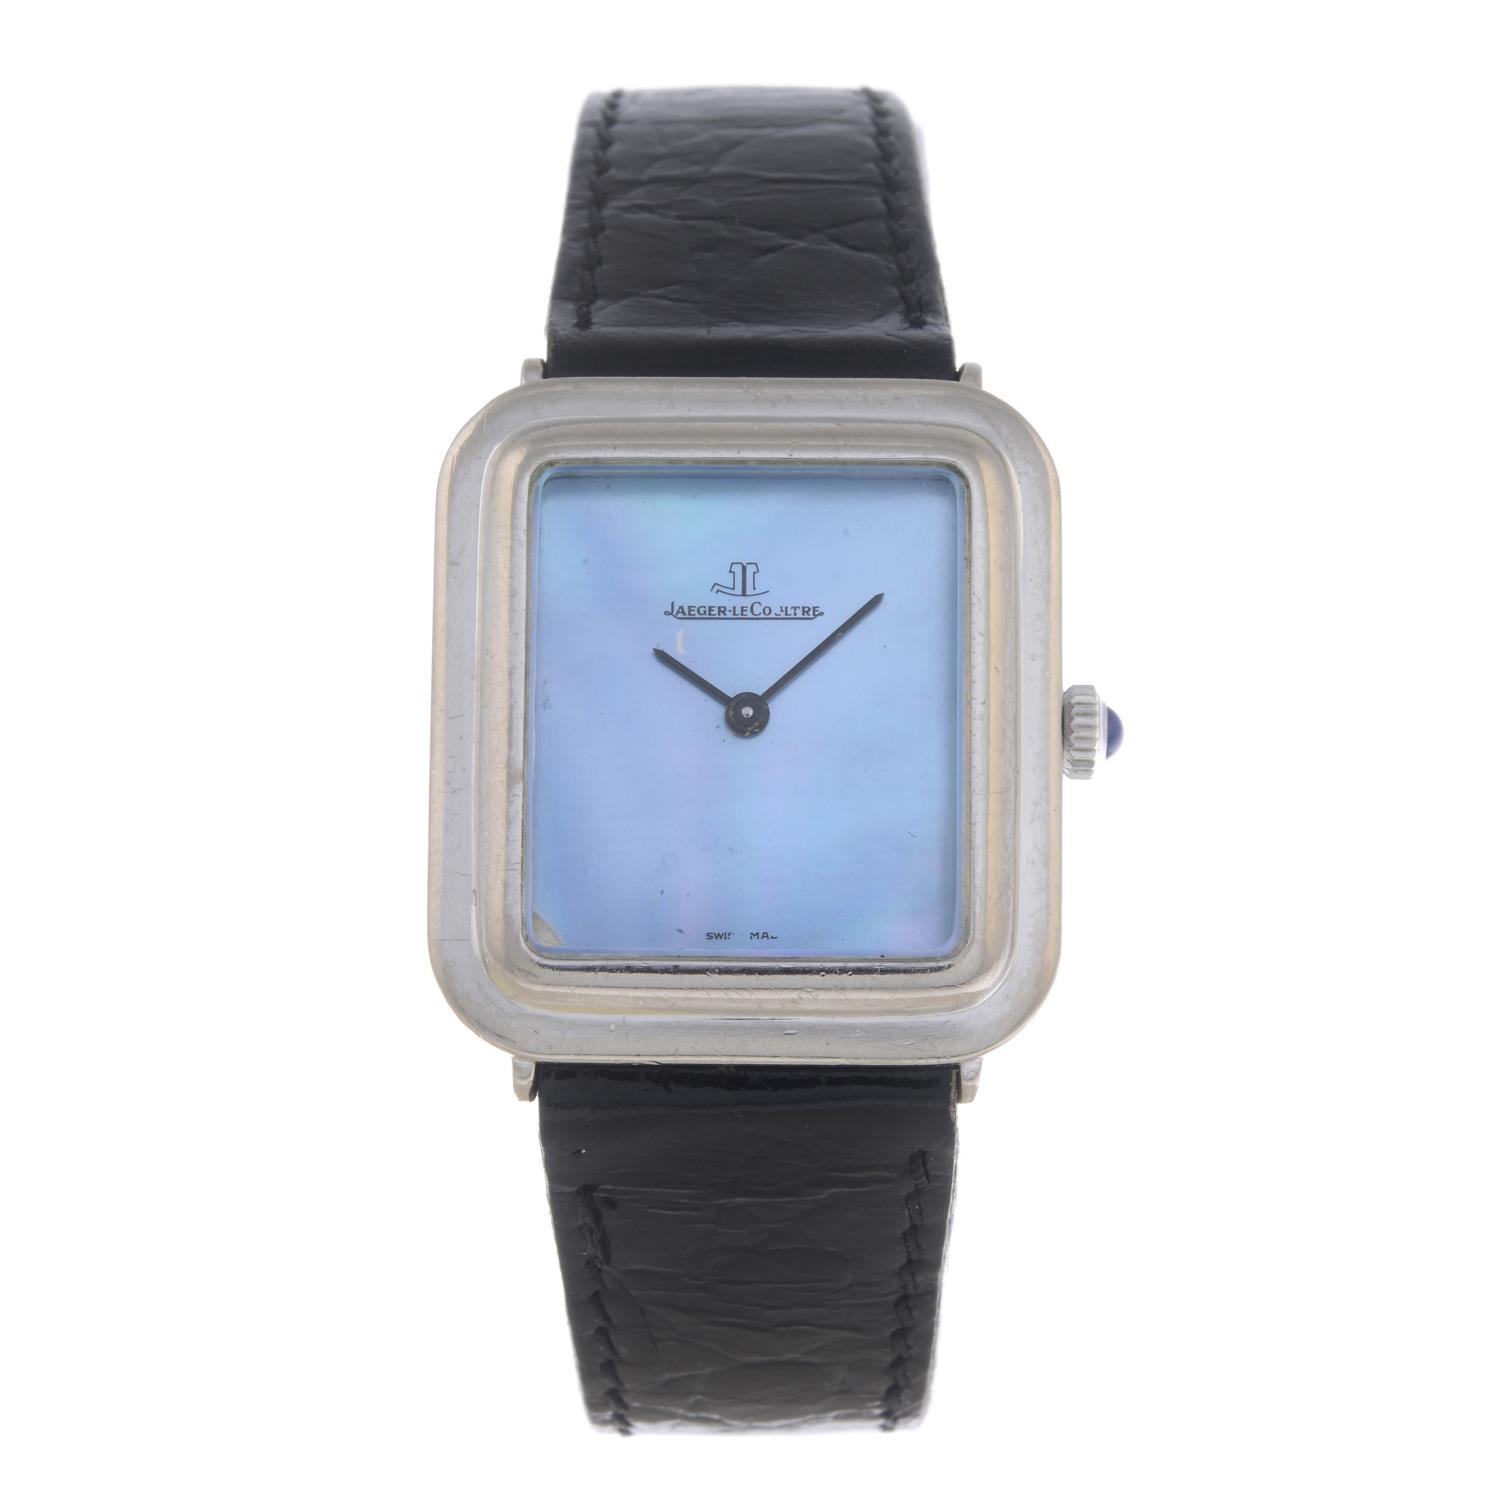 JAEGER-LECOULTRE - a lady's wrist watch.